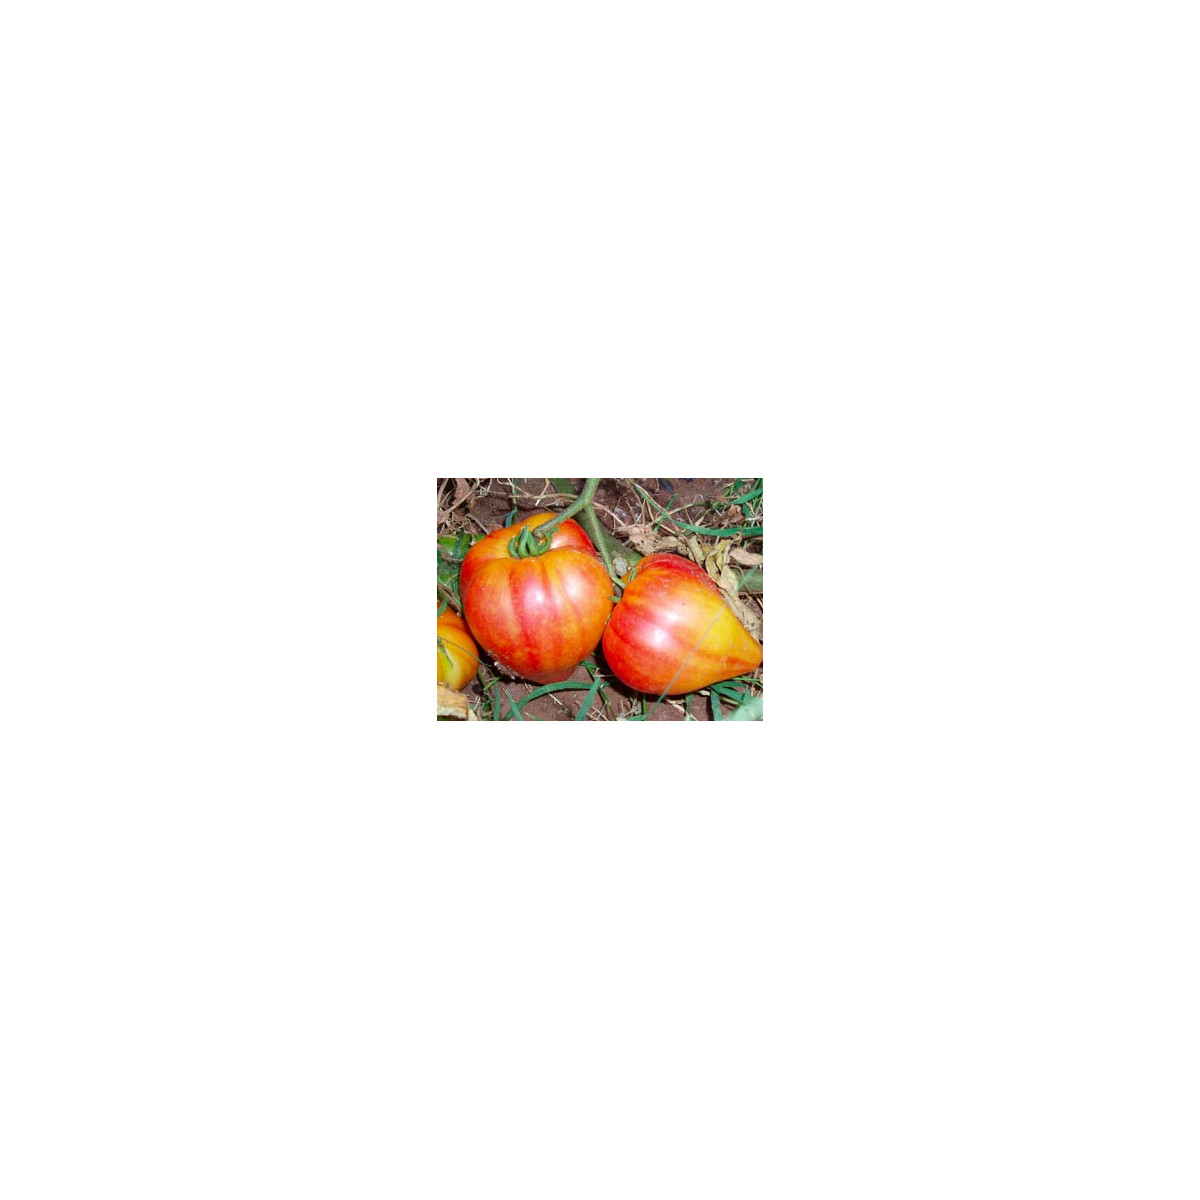 Rajče ruské oranžové - Lycopersicon esculentum - semena - 6 ks